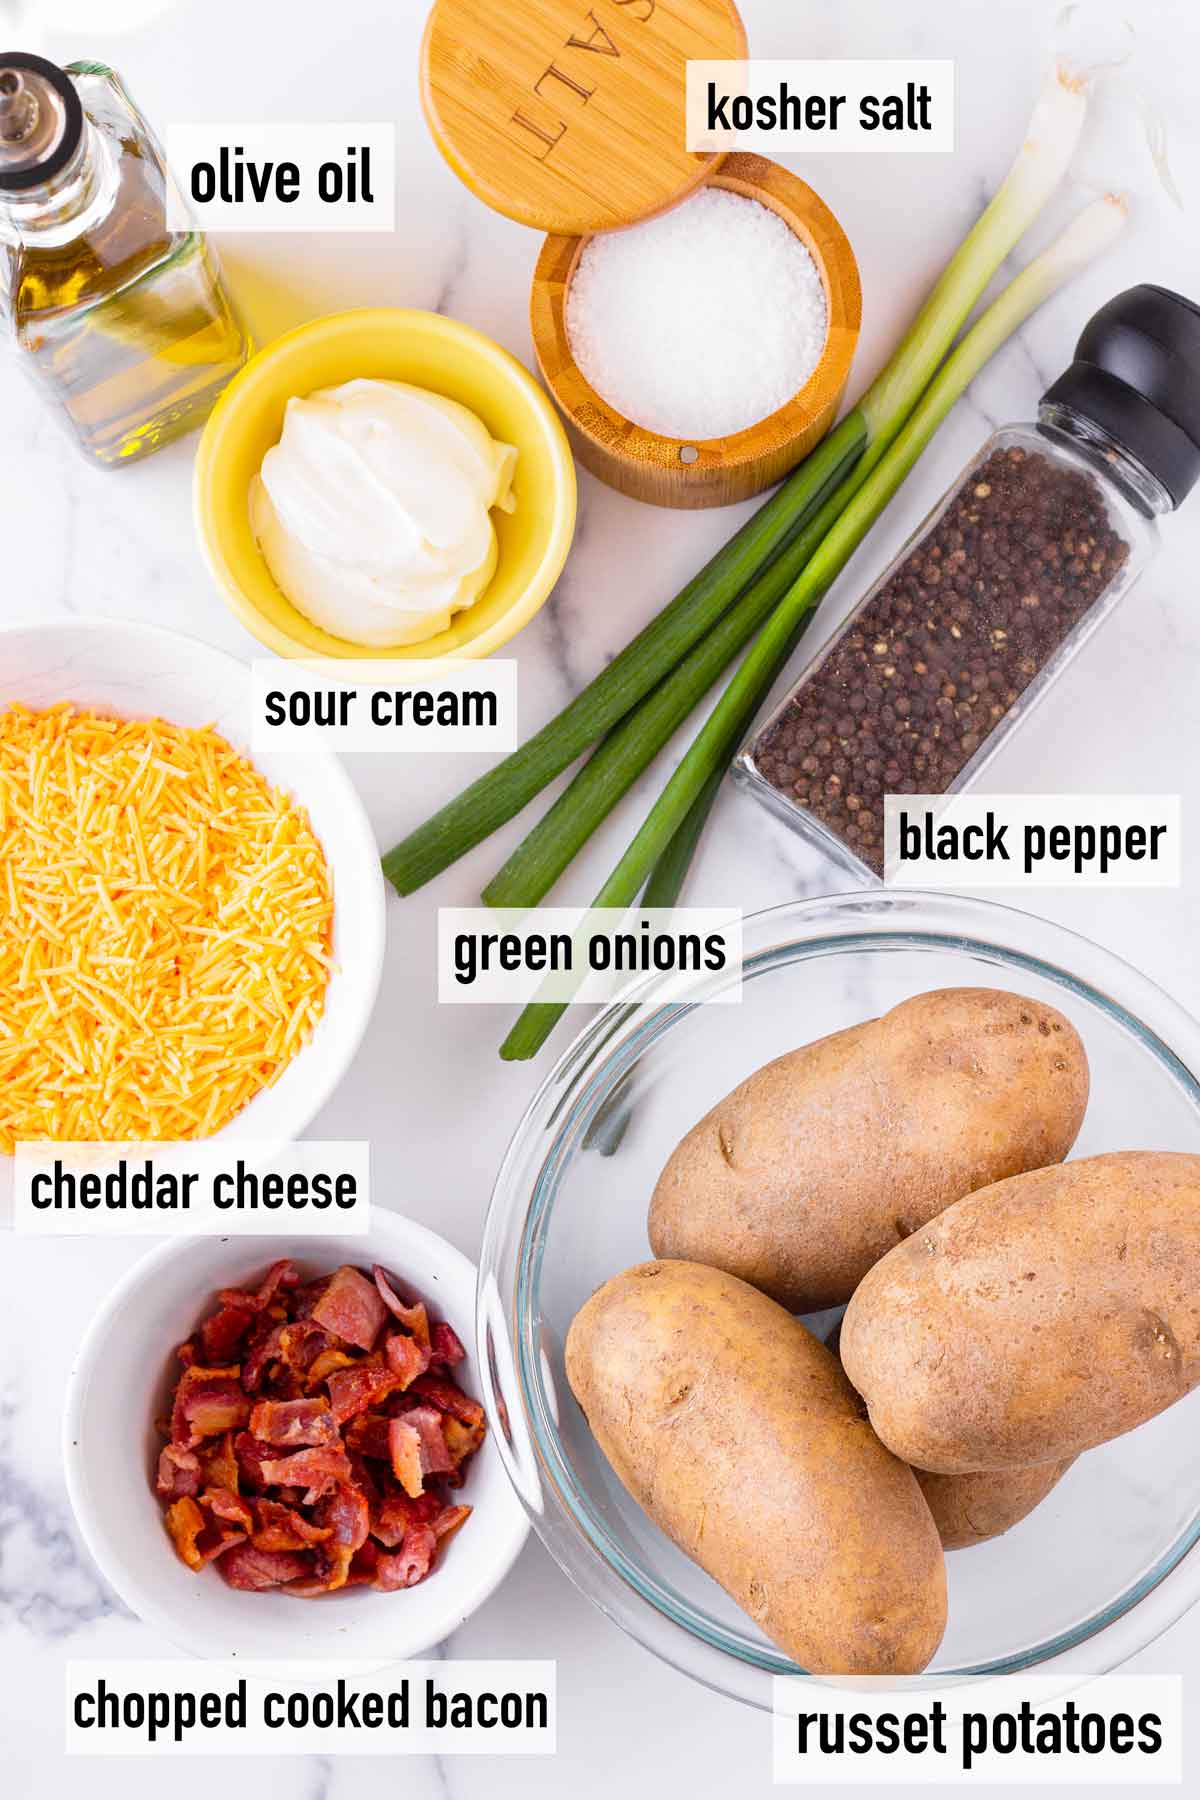 labeled ingredients to make baked potato skins